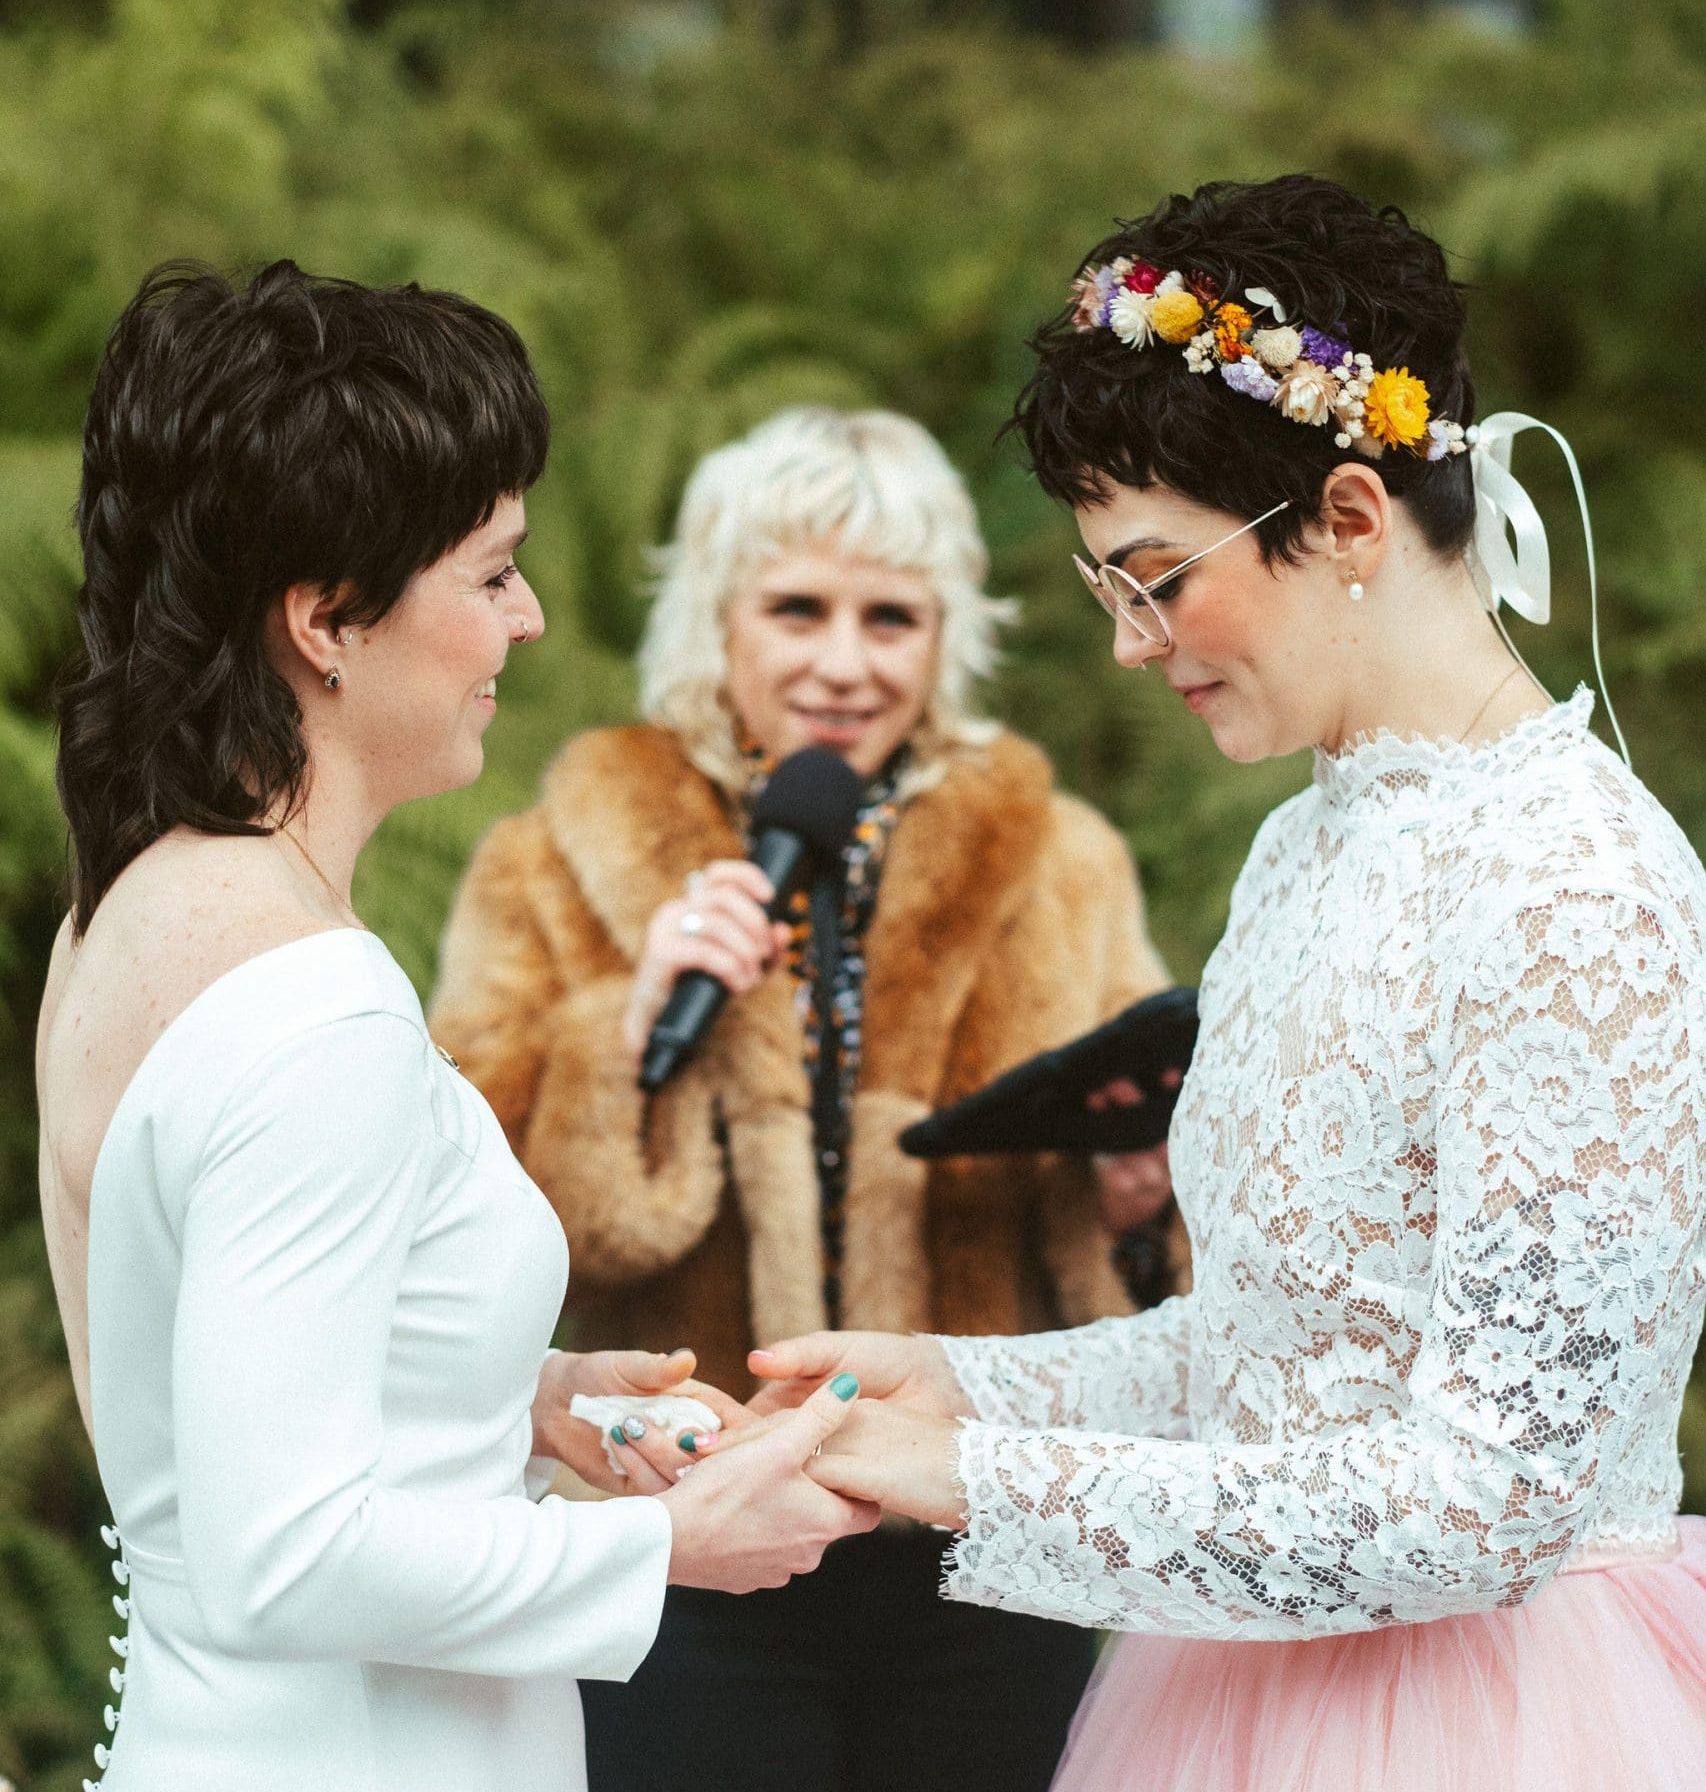 Renee the Celebrant Marries Queer Couple